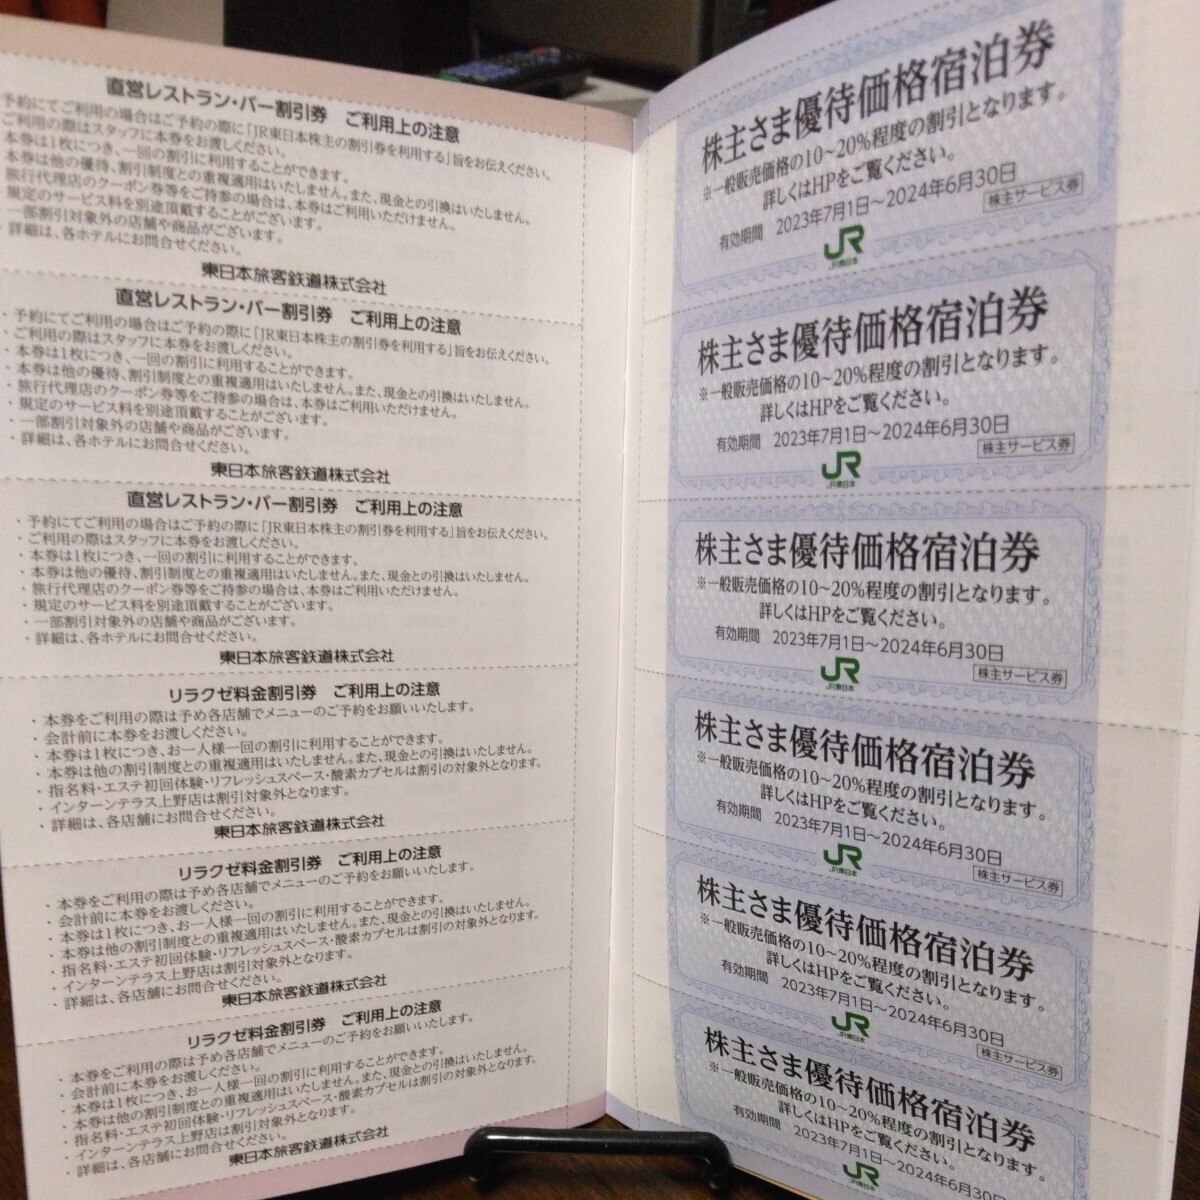 JR東日本 株主優待割引券と株主サービス券のセット (送料無料)の画像3